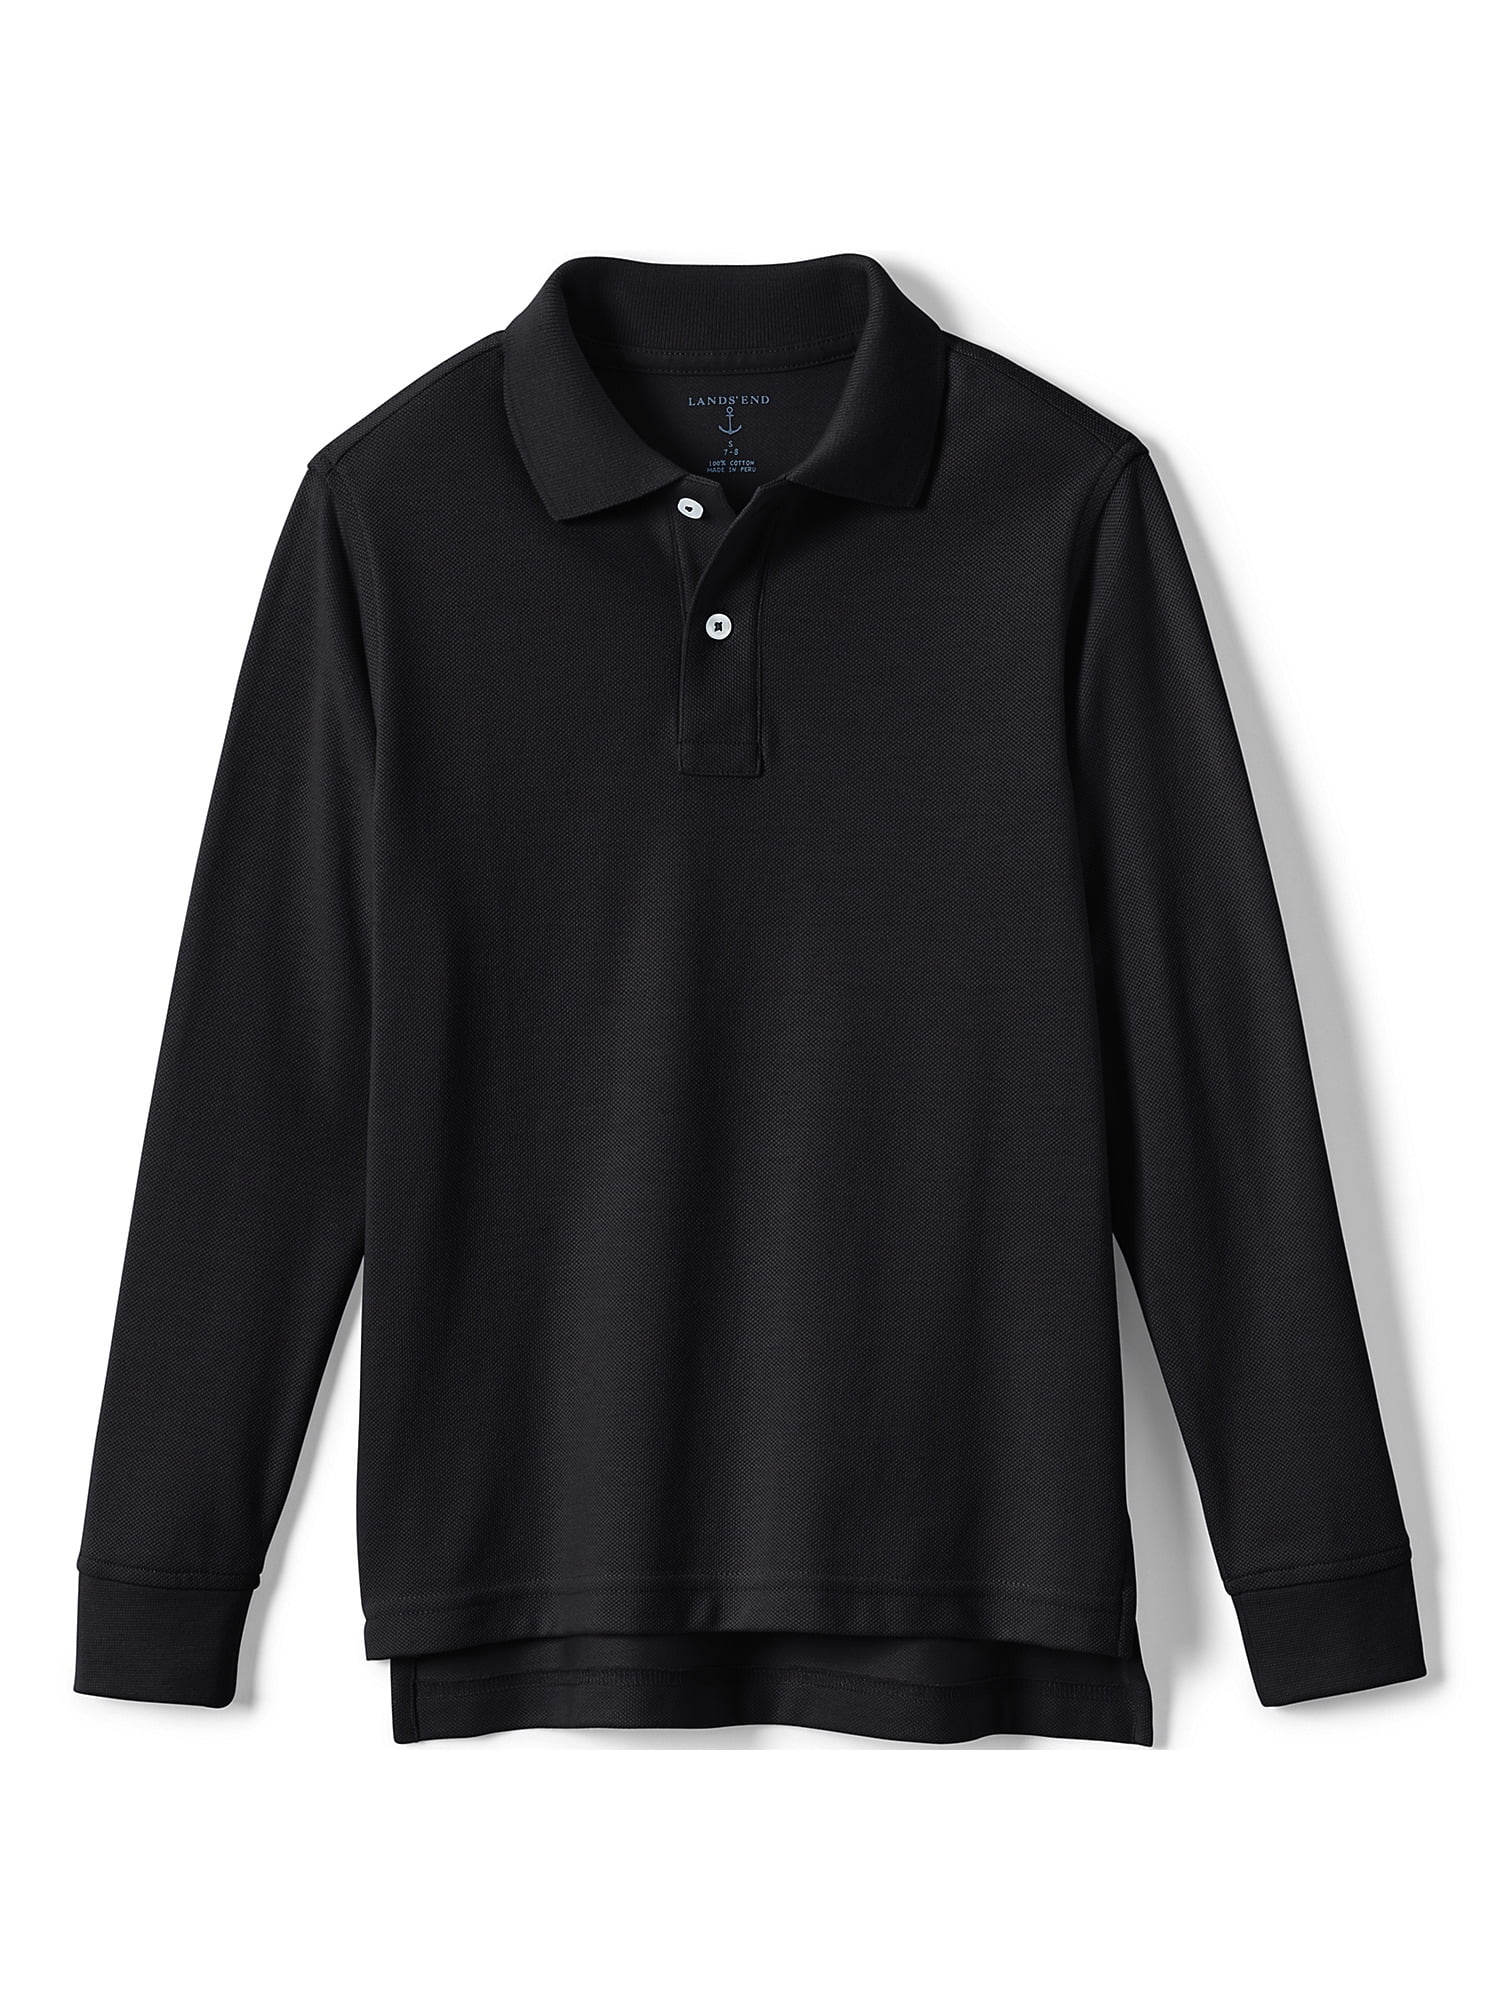 Lands' End School Uniform Kids Long Sleeve Mesh Polo Shirt - Walmart.com